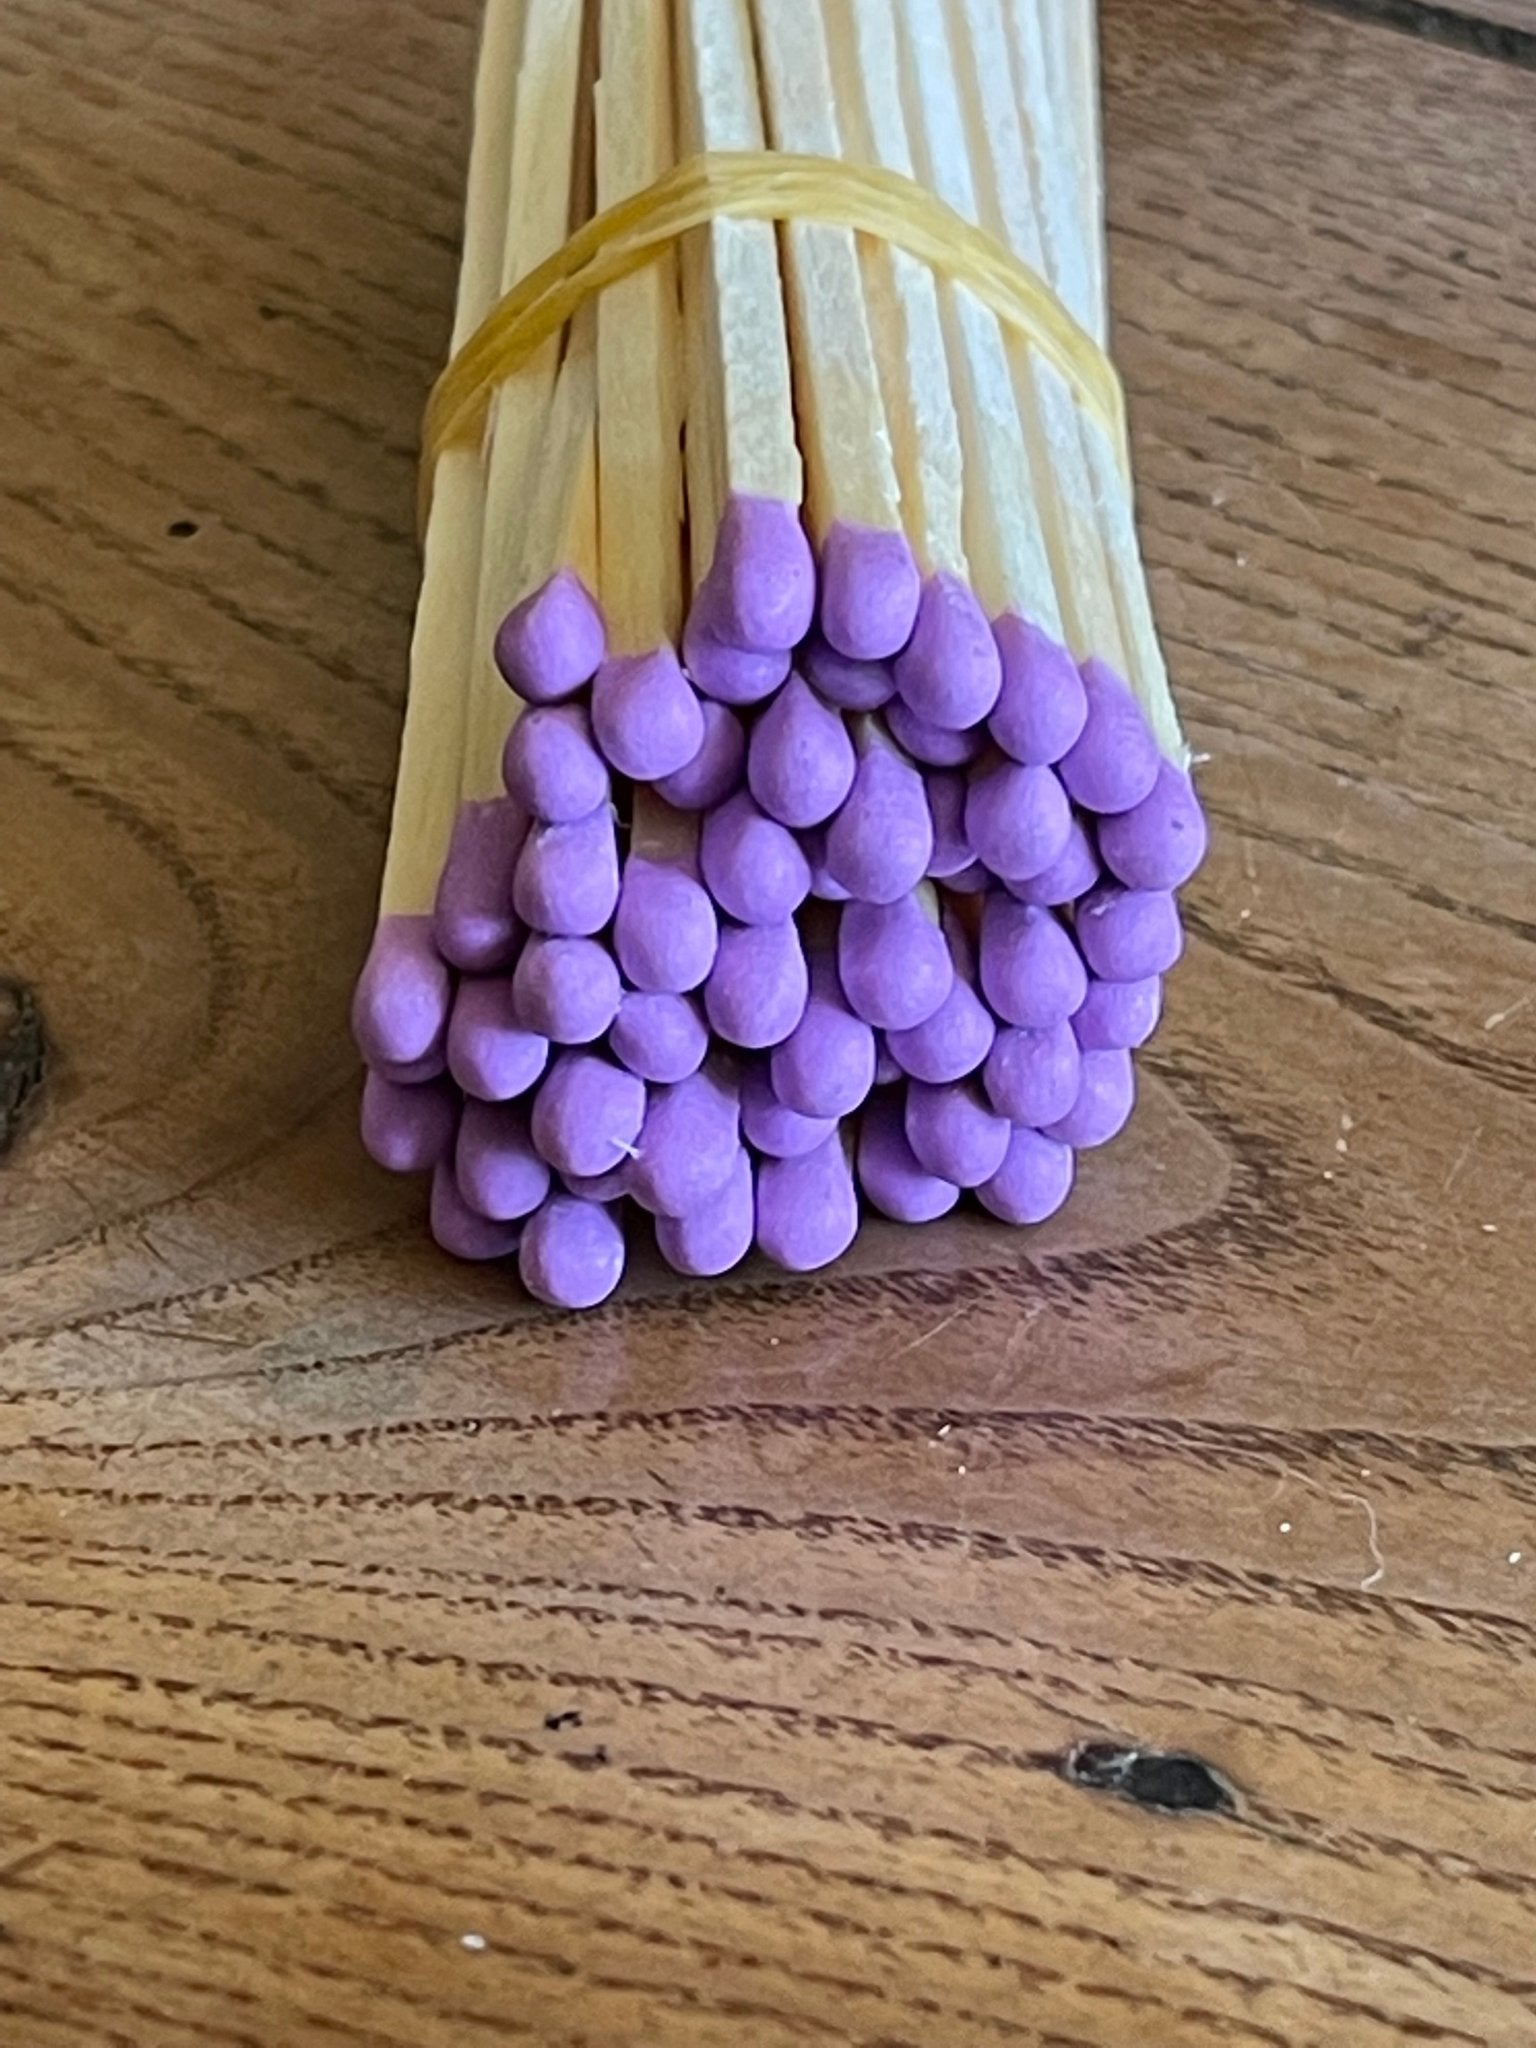 Bulk Wood Matches - 500 Count - 4 Long Wooden (Purple)